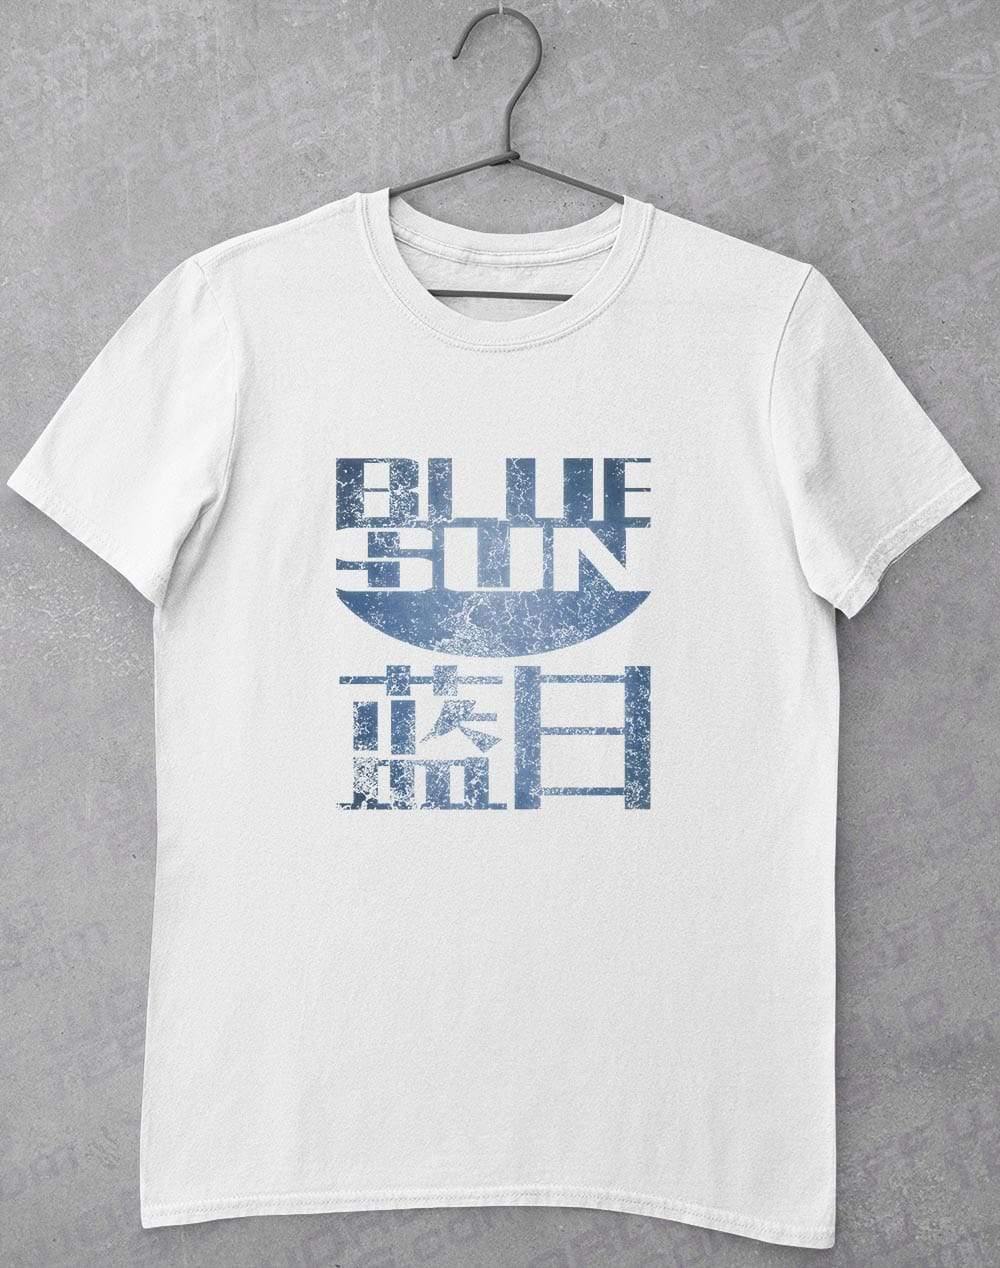 Blue Sun T-Shirt S / White  - Off World Tees